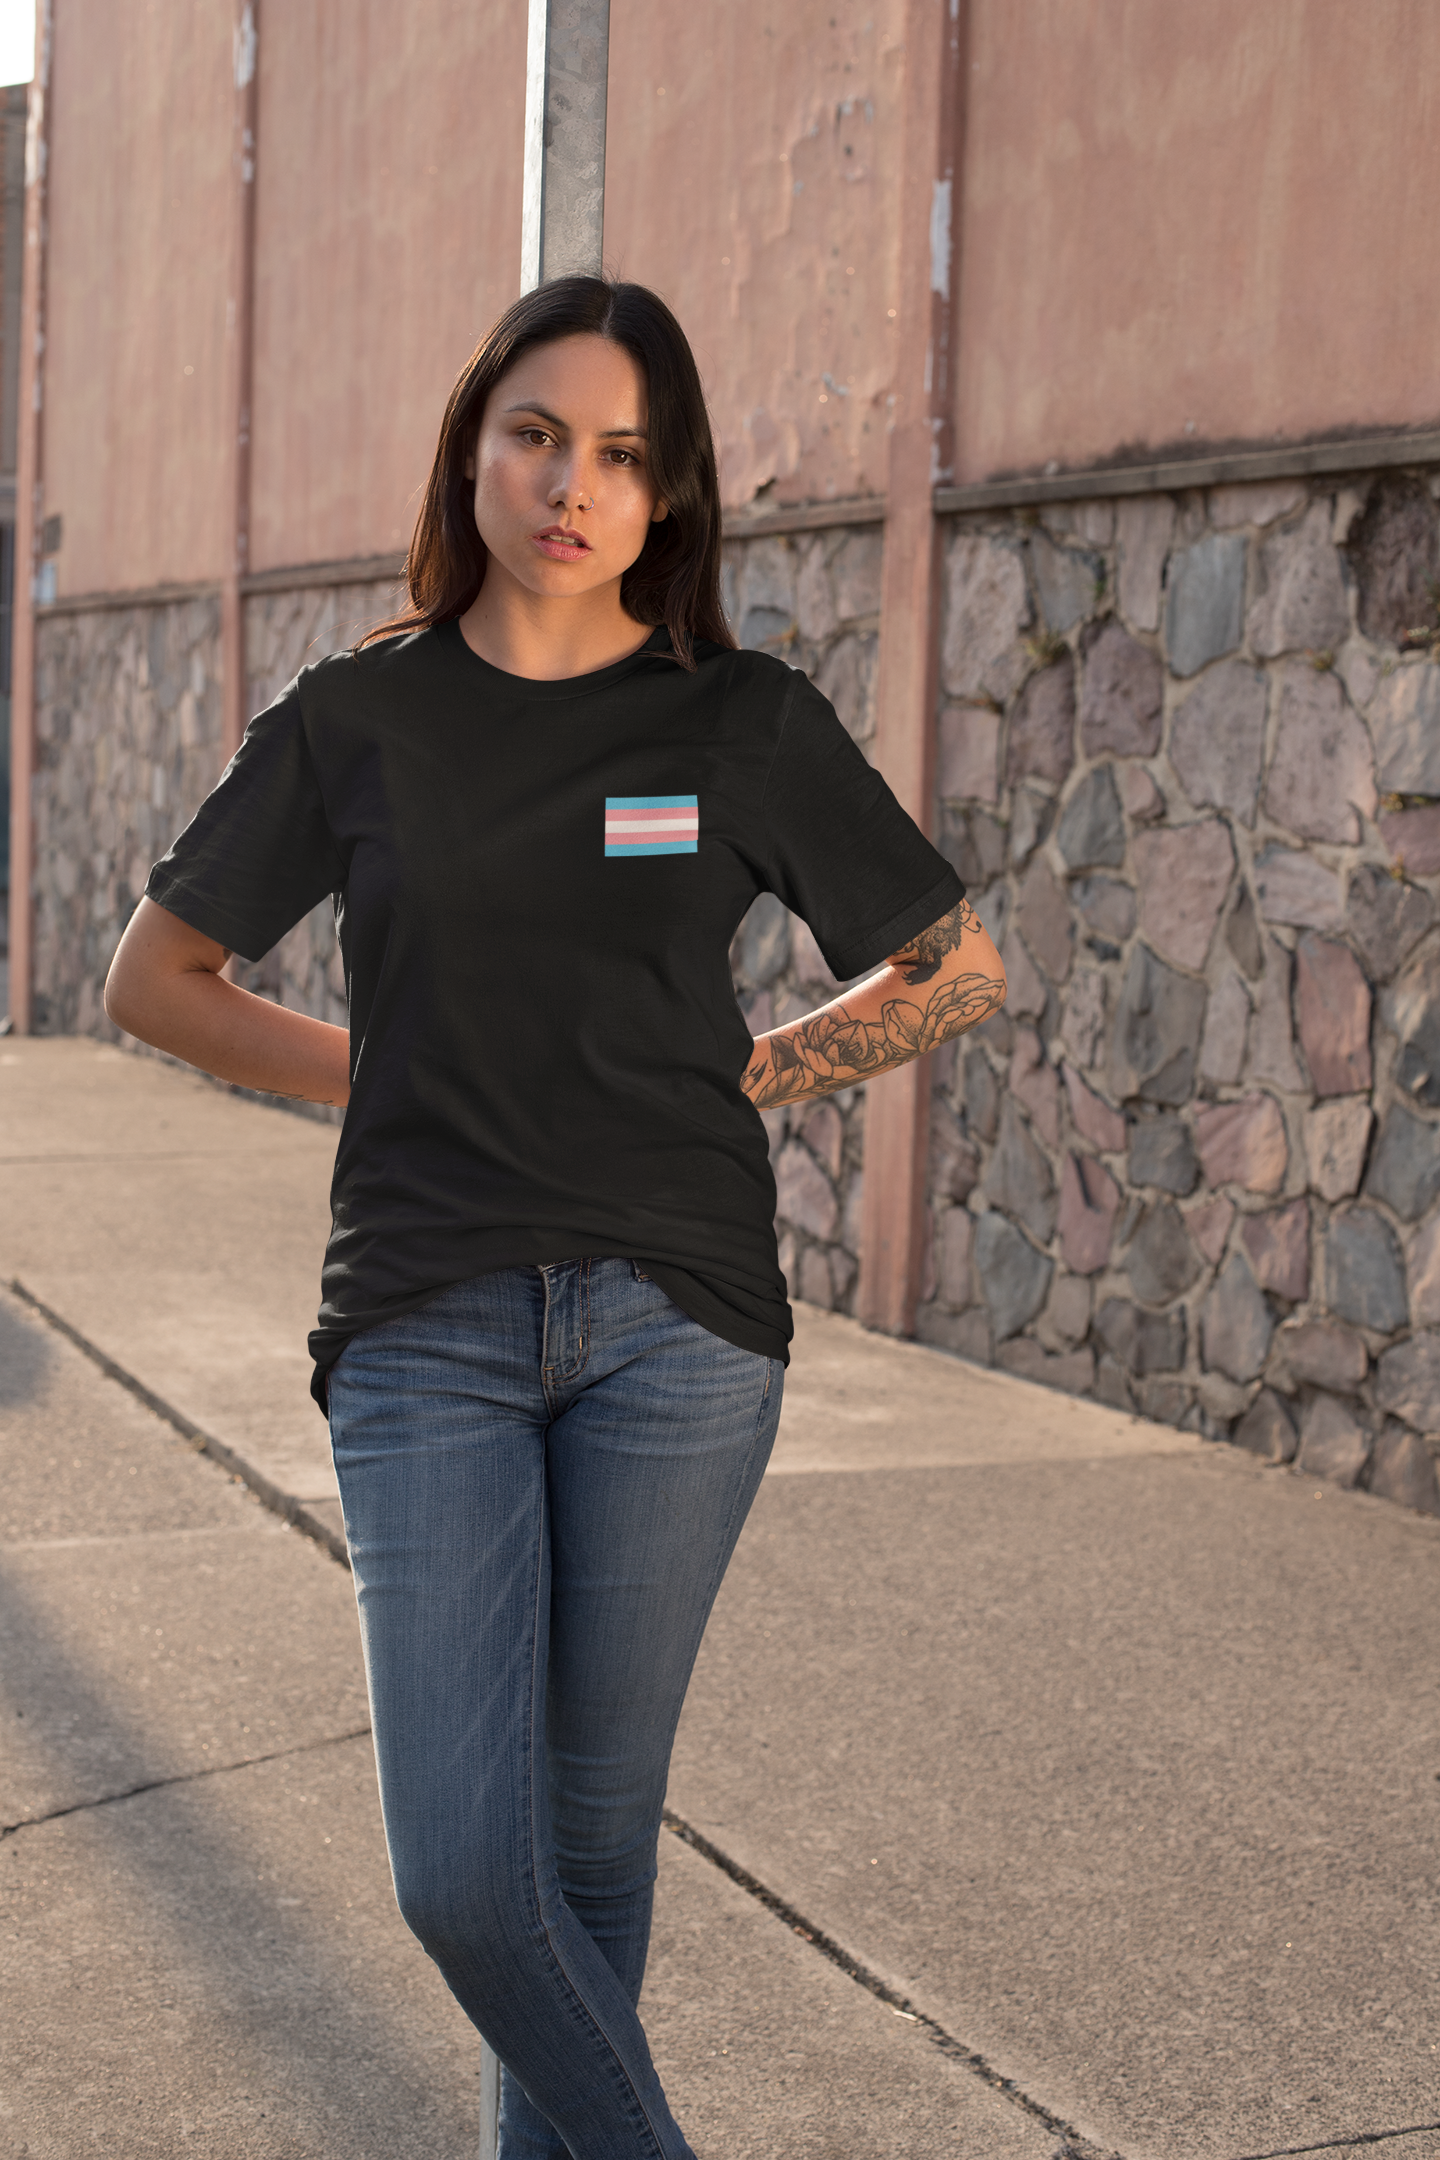 Trans Pride Flag : Unisex 100% Comfy Cotton T-Shirt by Bella+Canvas